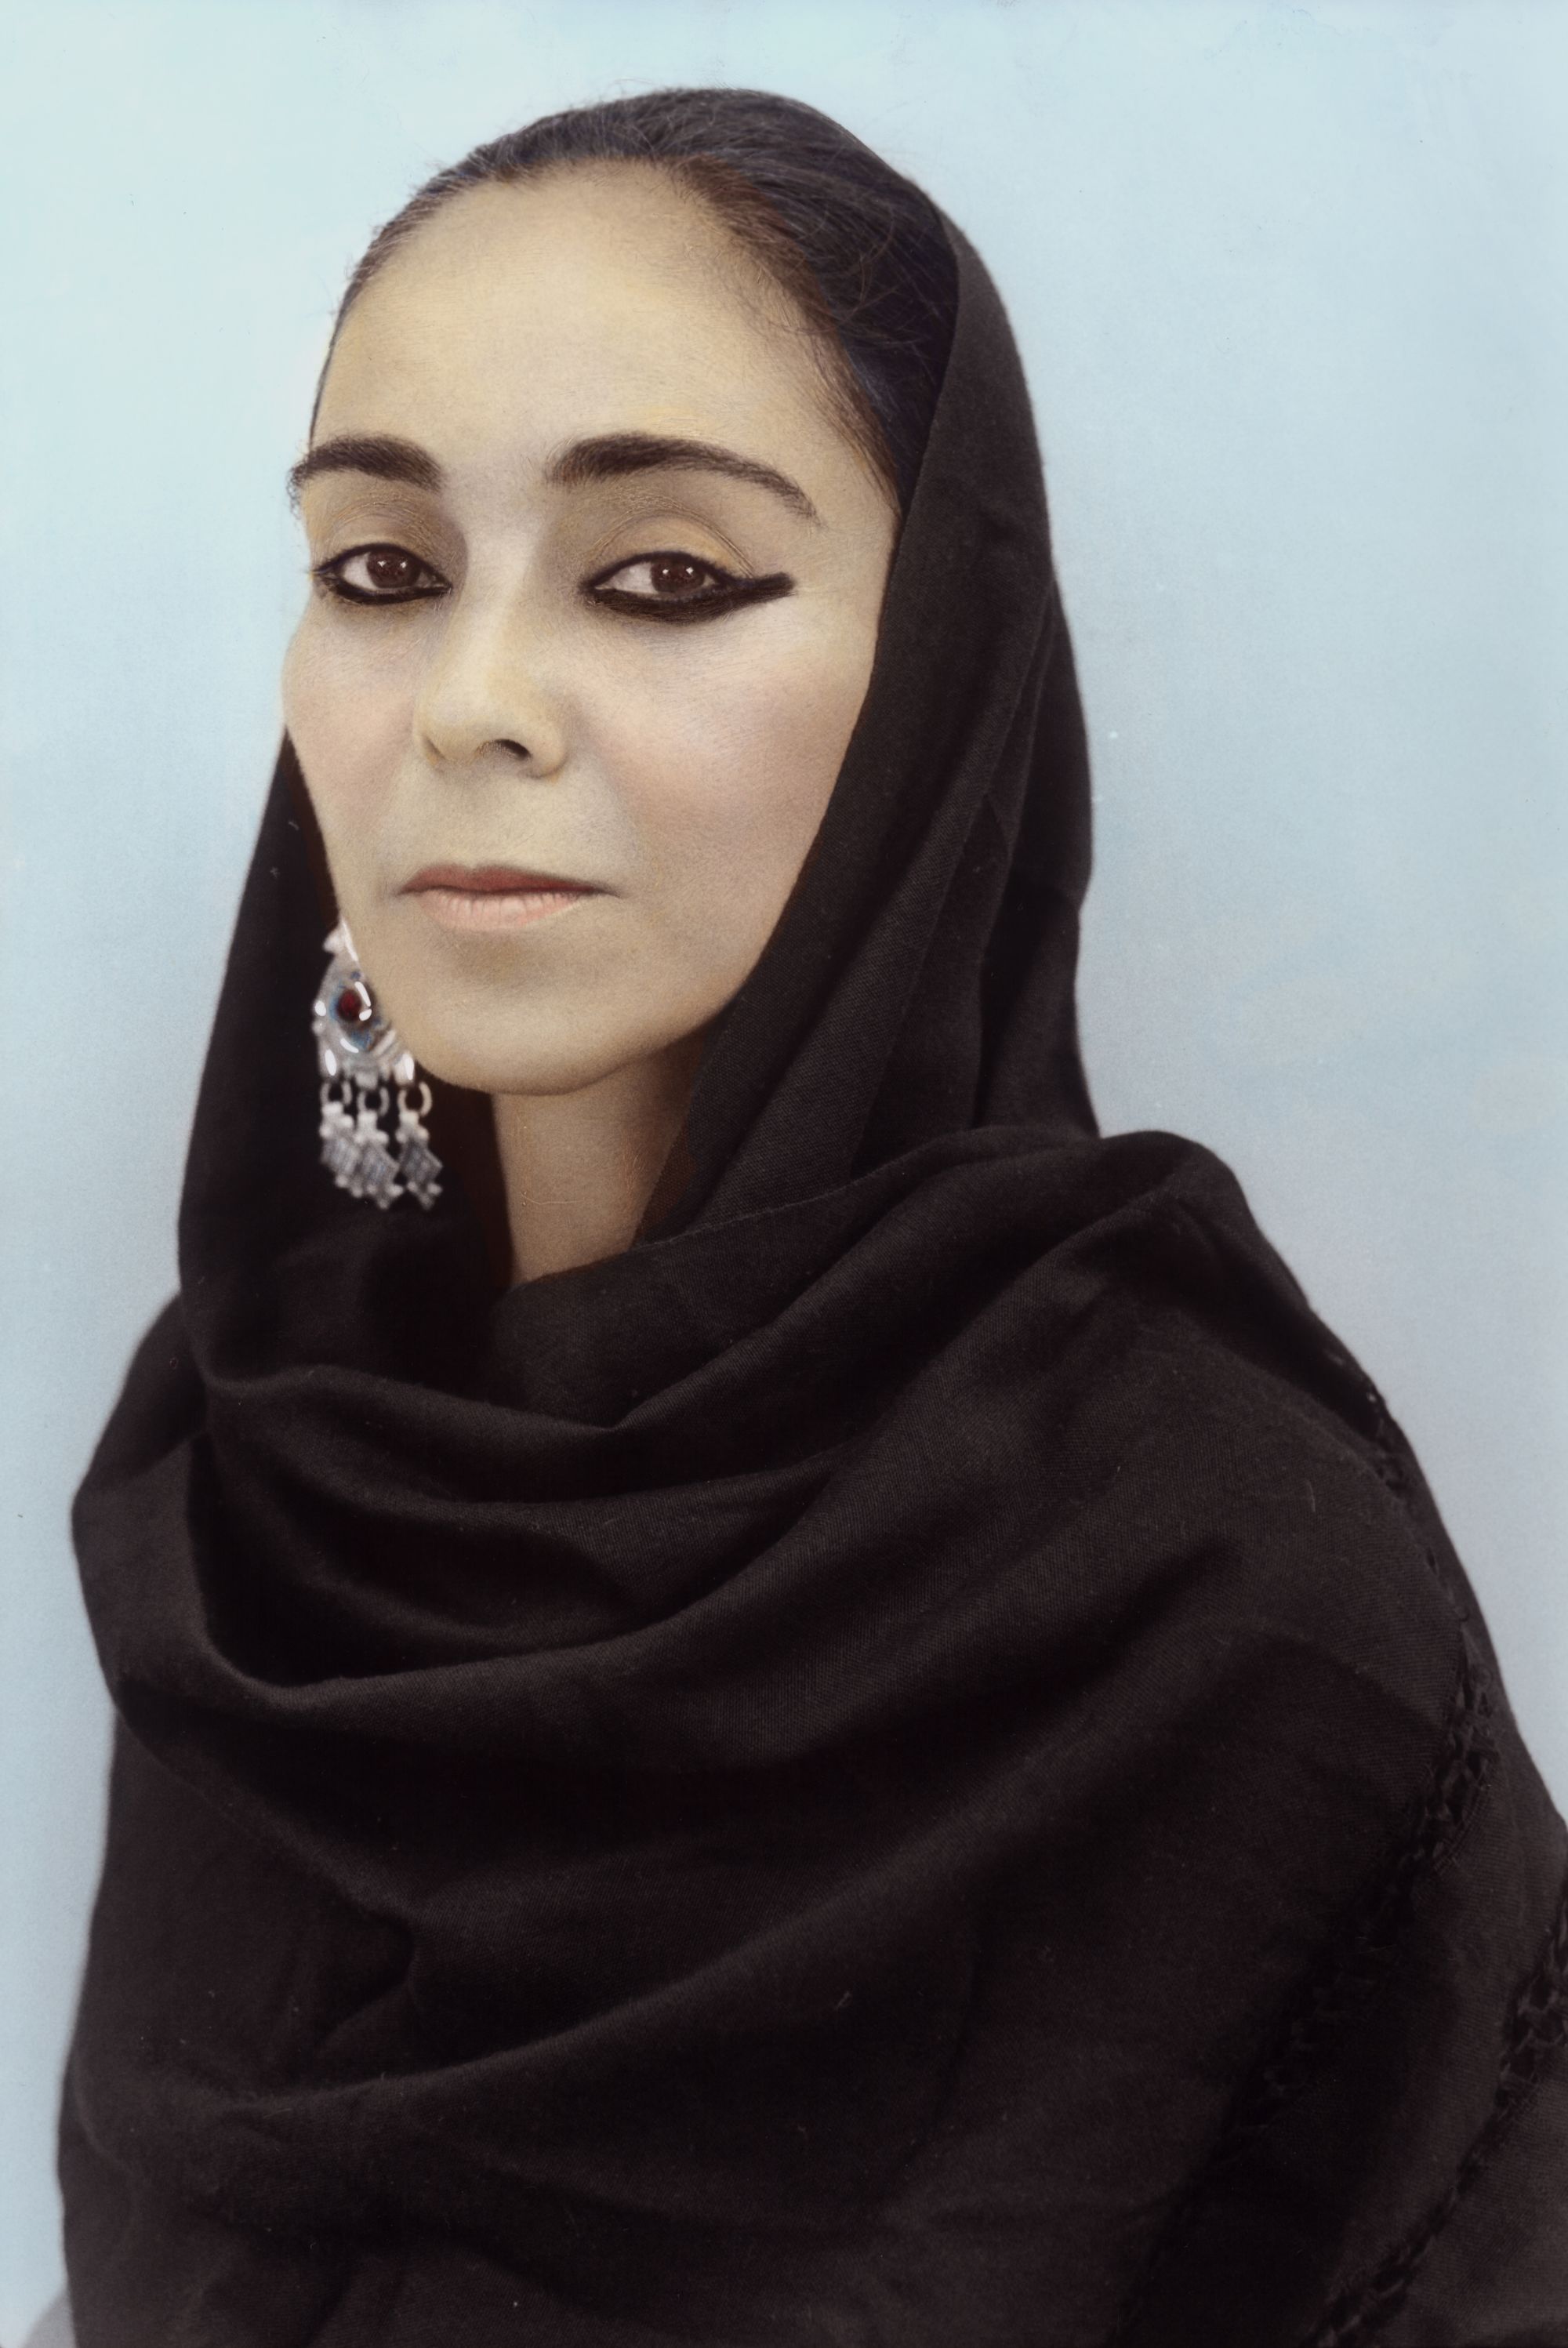 05 Shirin Neshat beauty essay RESTRICTED